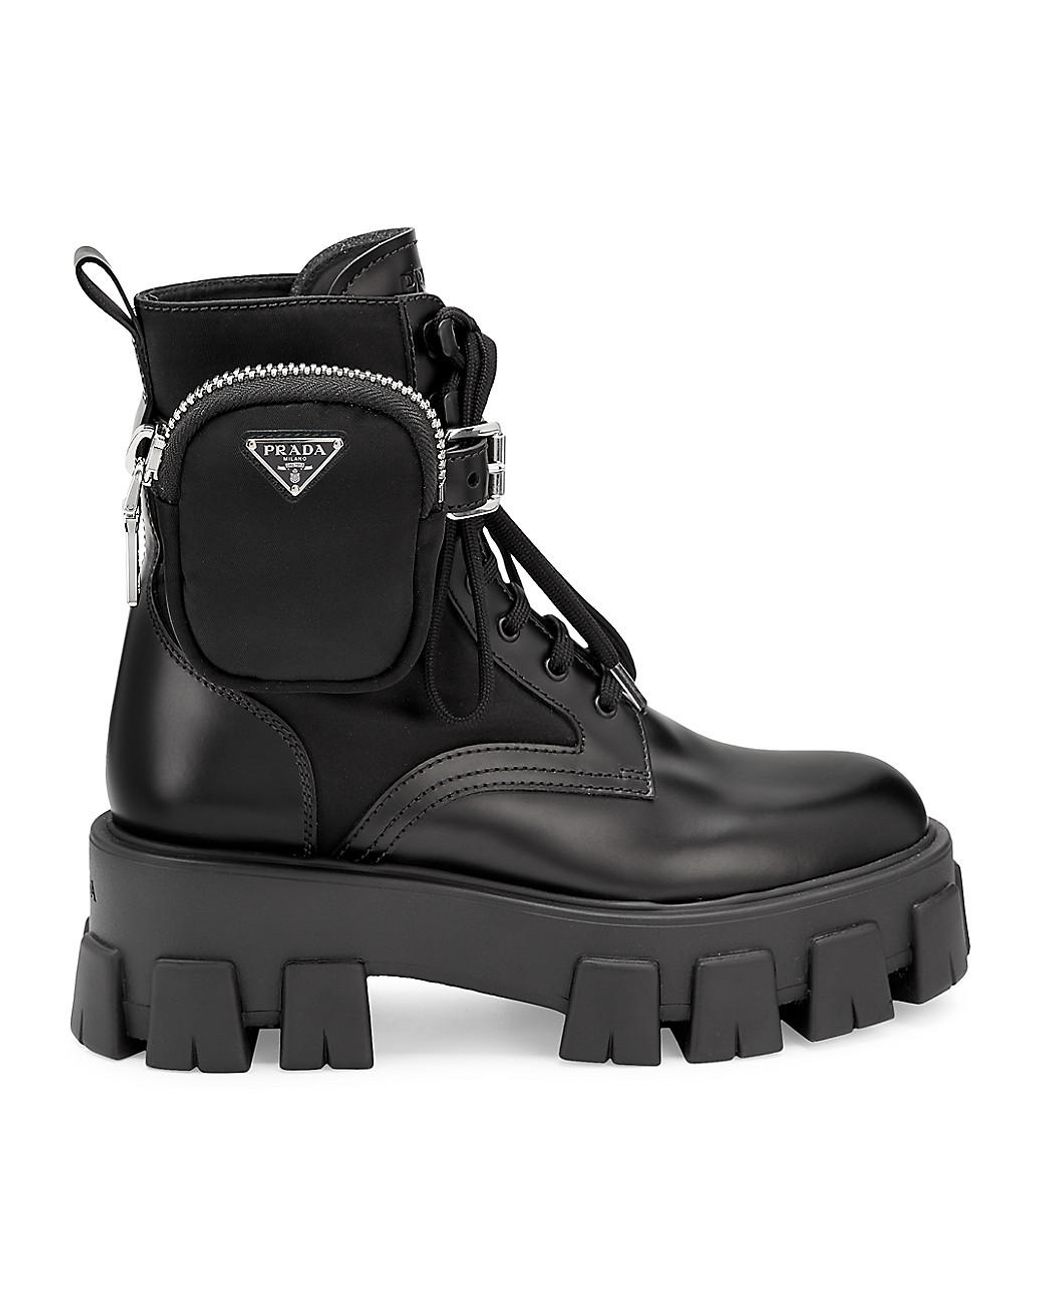 Prada Lug-sole Leather Combat Boots in Nero (Black) - Lyst